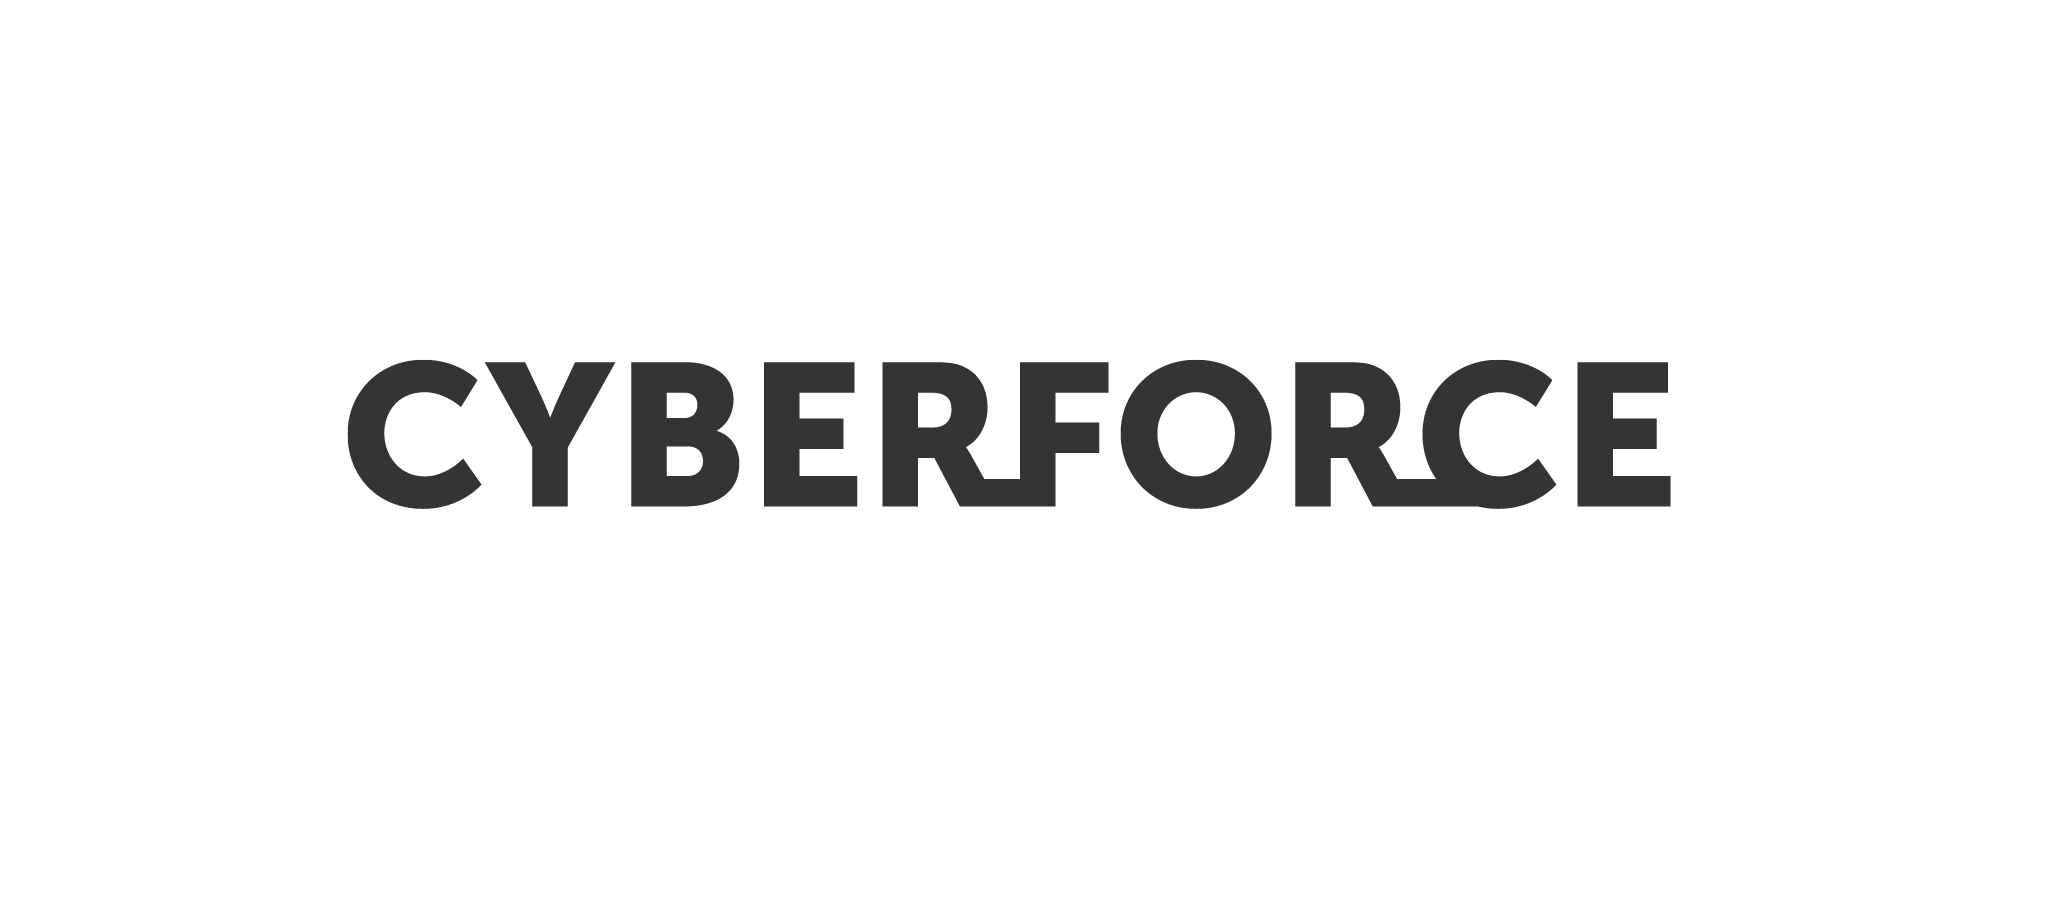 Cyberforce - POST Luxembourg et EBRC